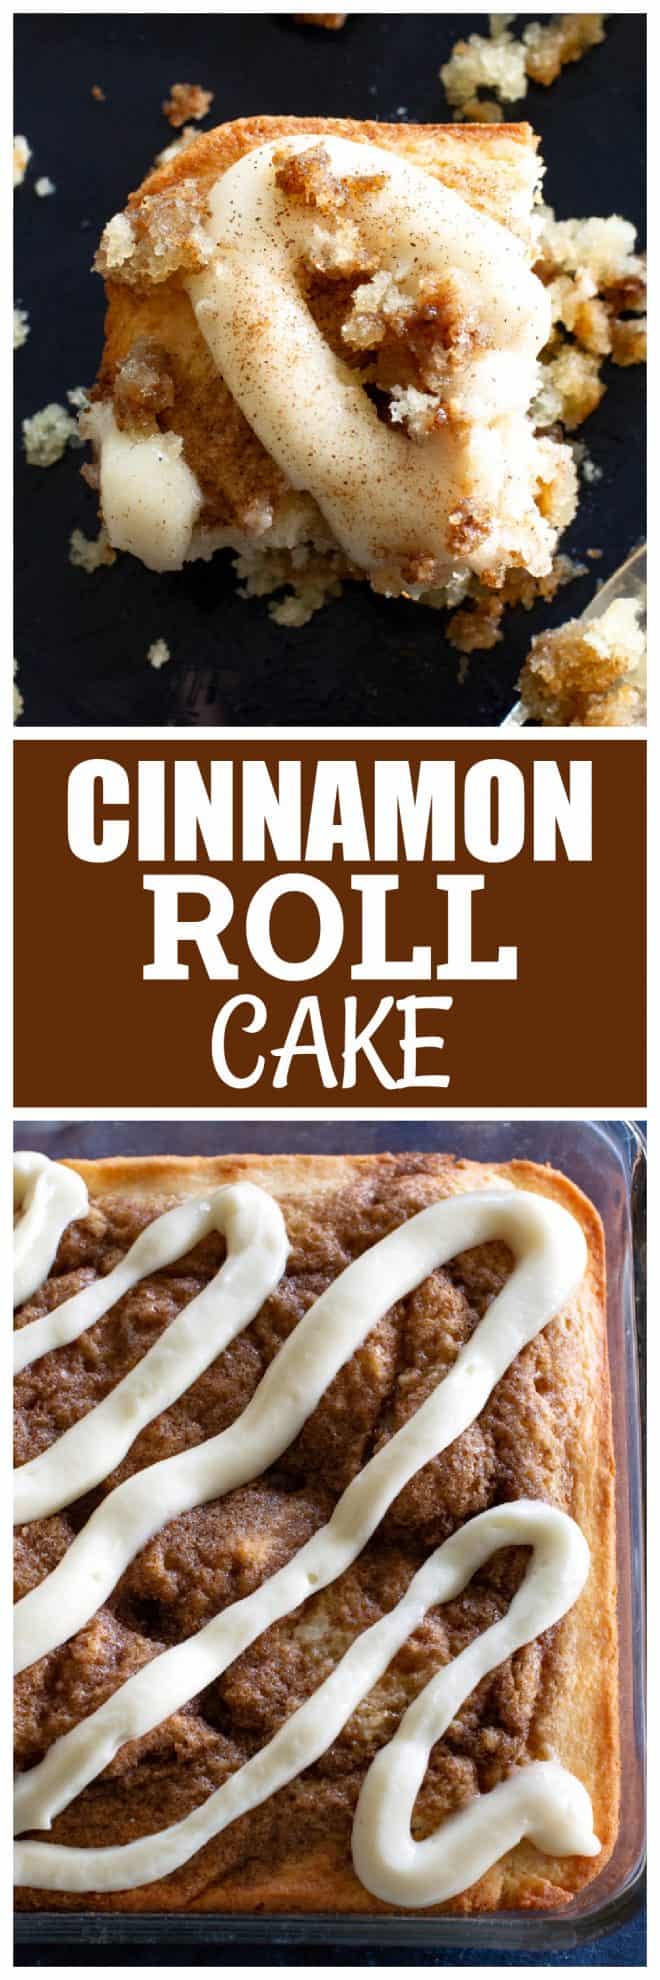 fb image - Cinnamon Roll Cake